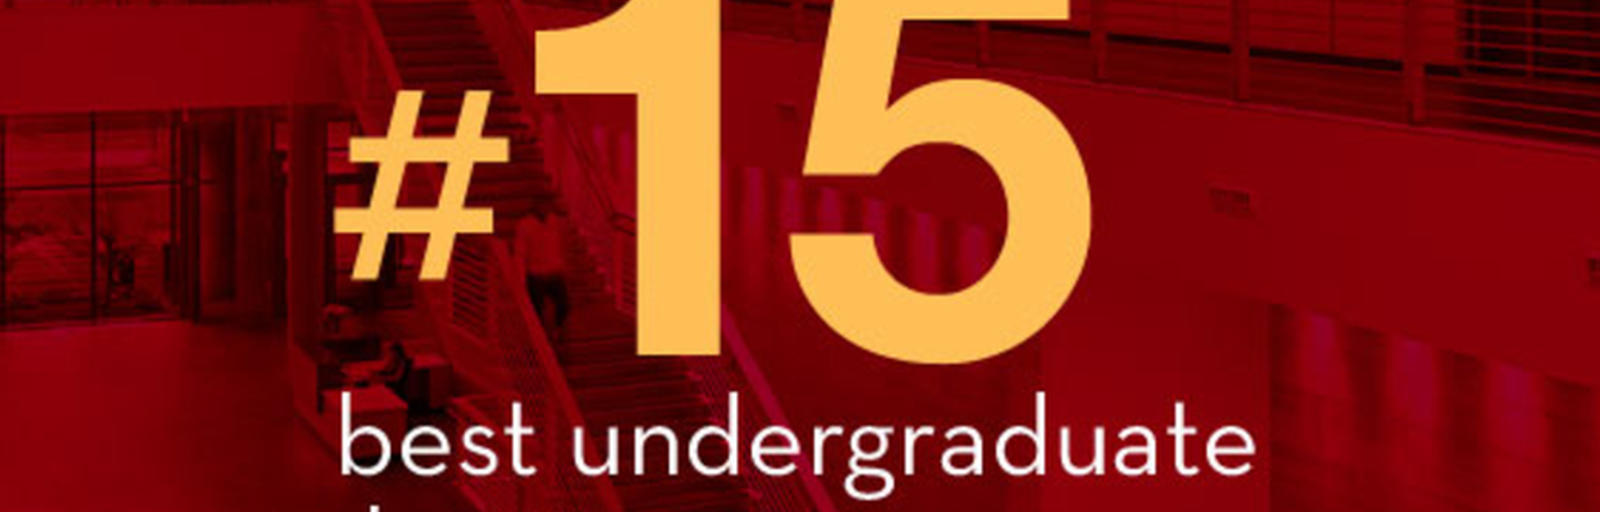 #15 best undergraduate business programs